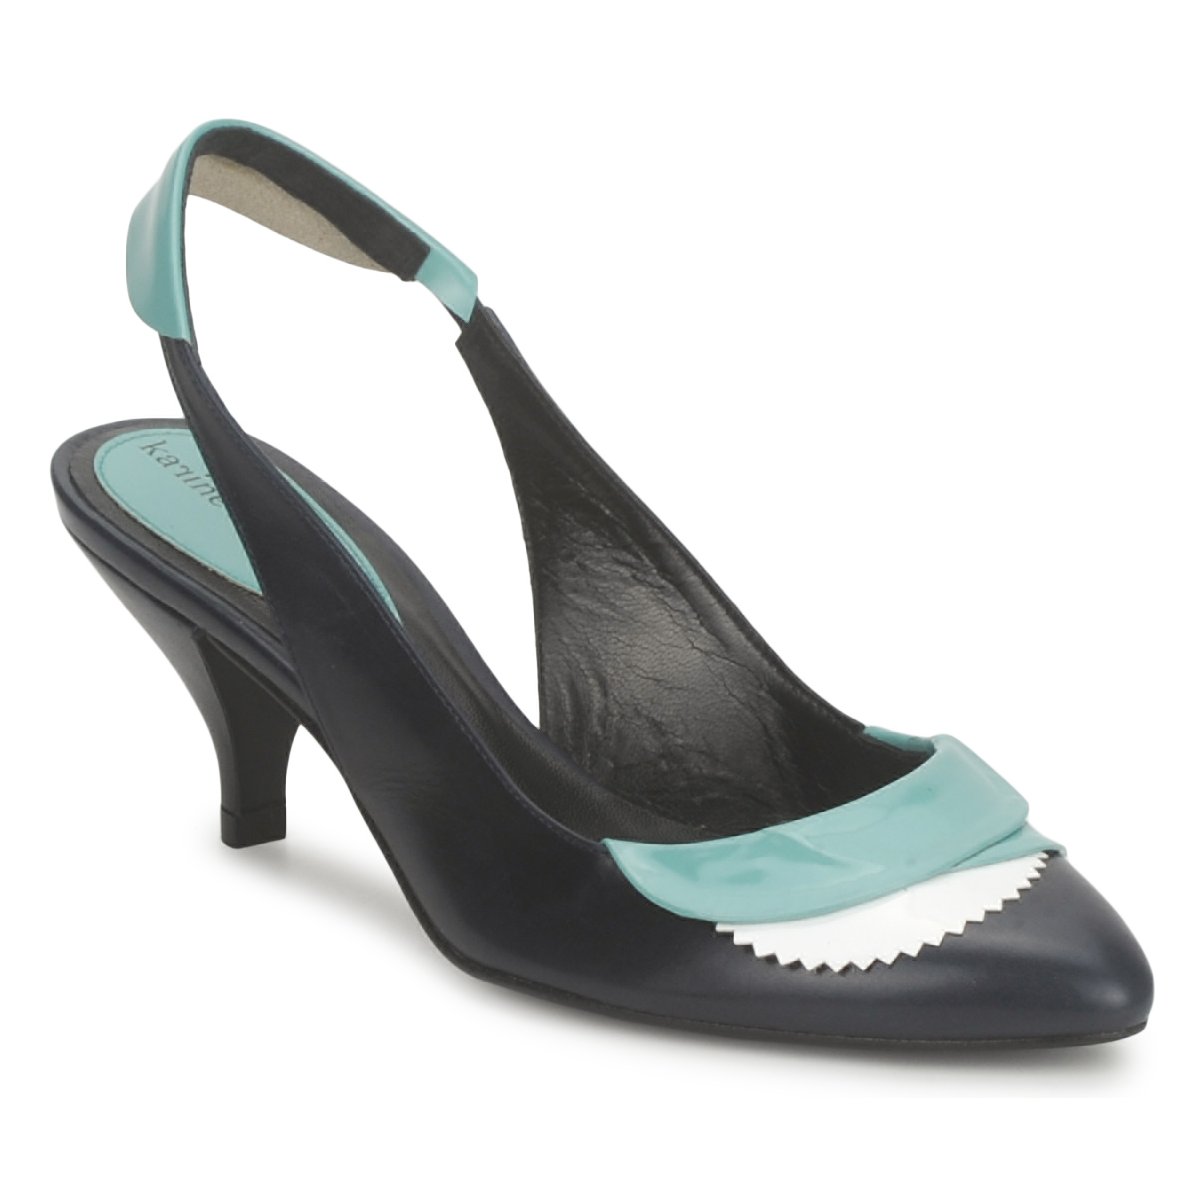 Shoes Women Sandals Karine Arabian LILA Ink / White / Turquoise